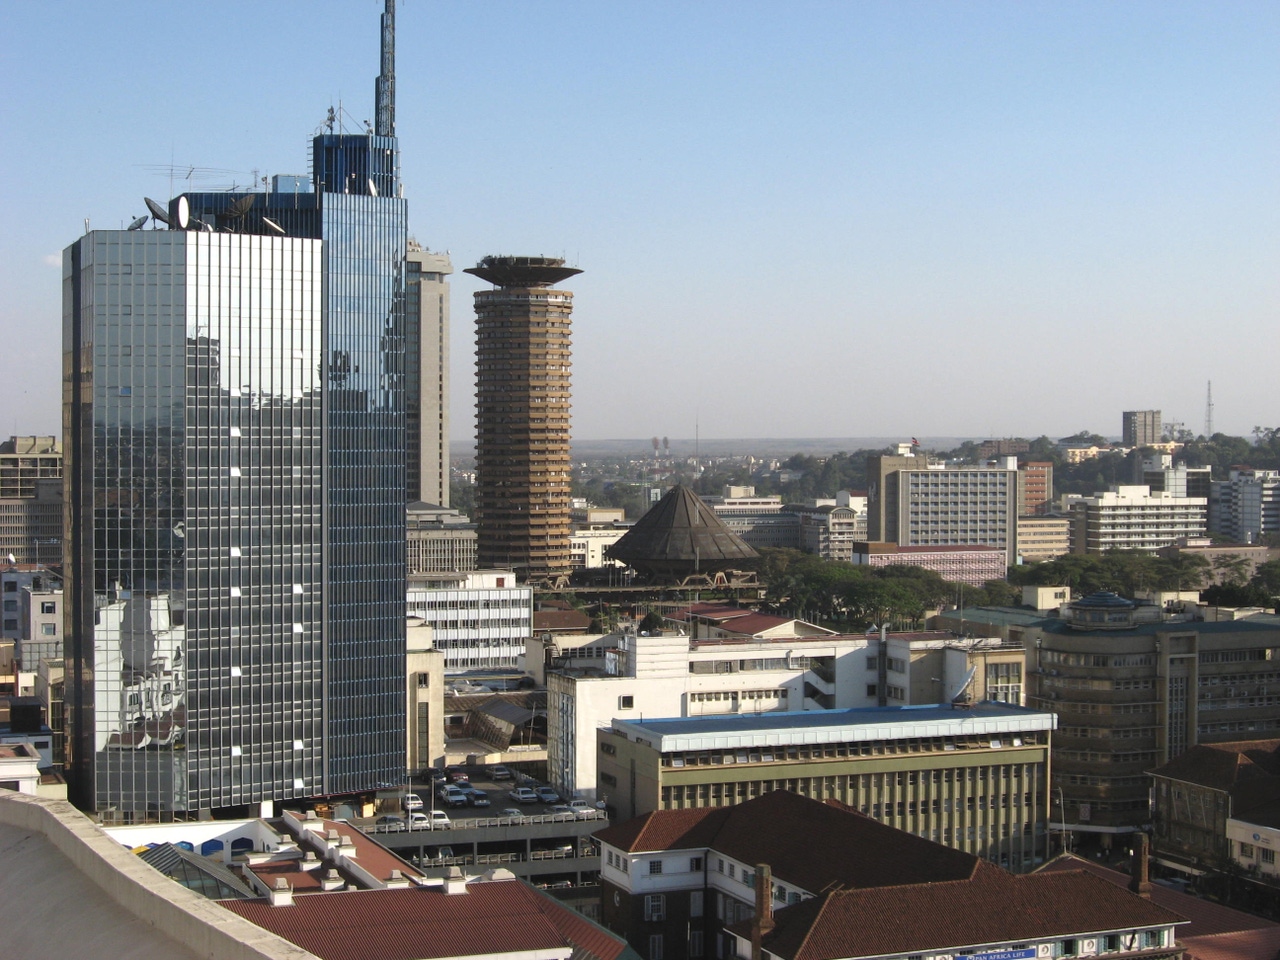 Kenya lowers “virtually all regulatory fees” for operators